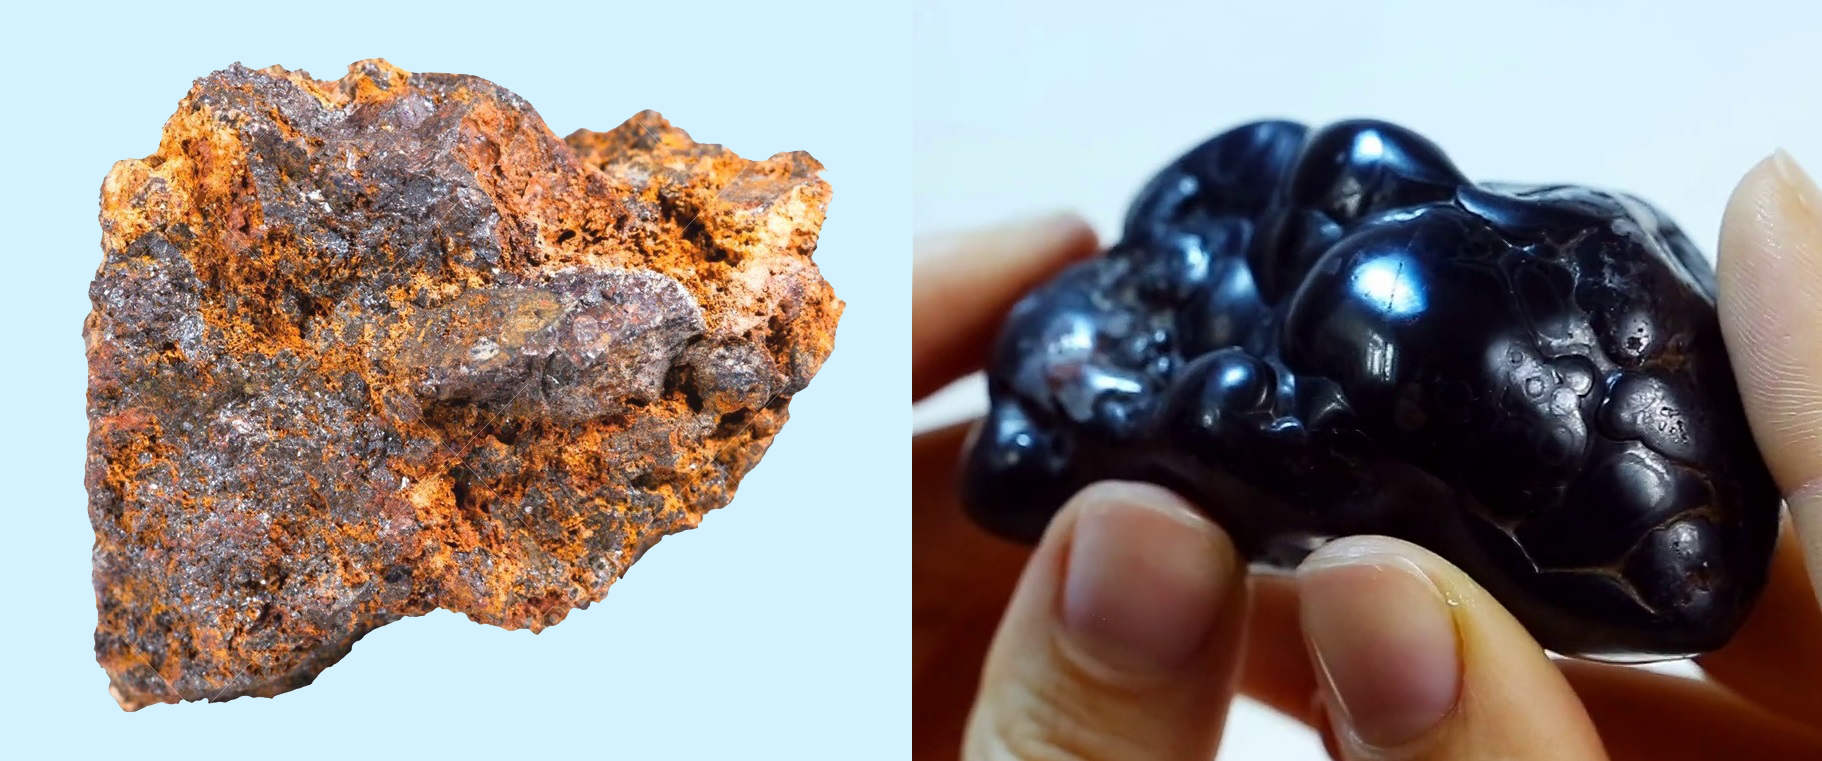 haematite iron ore